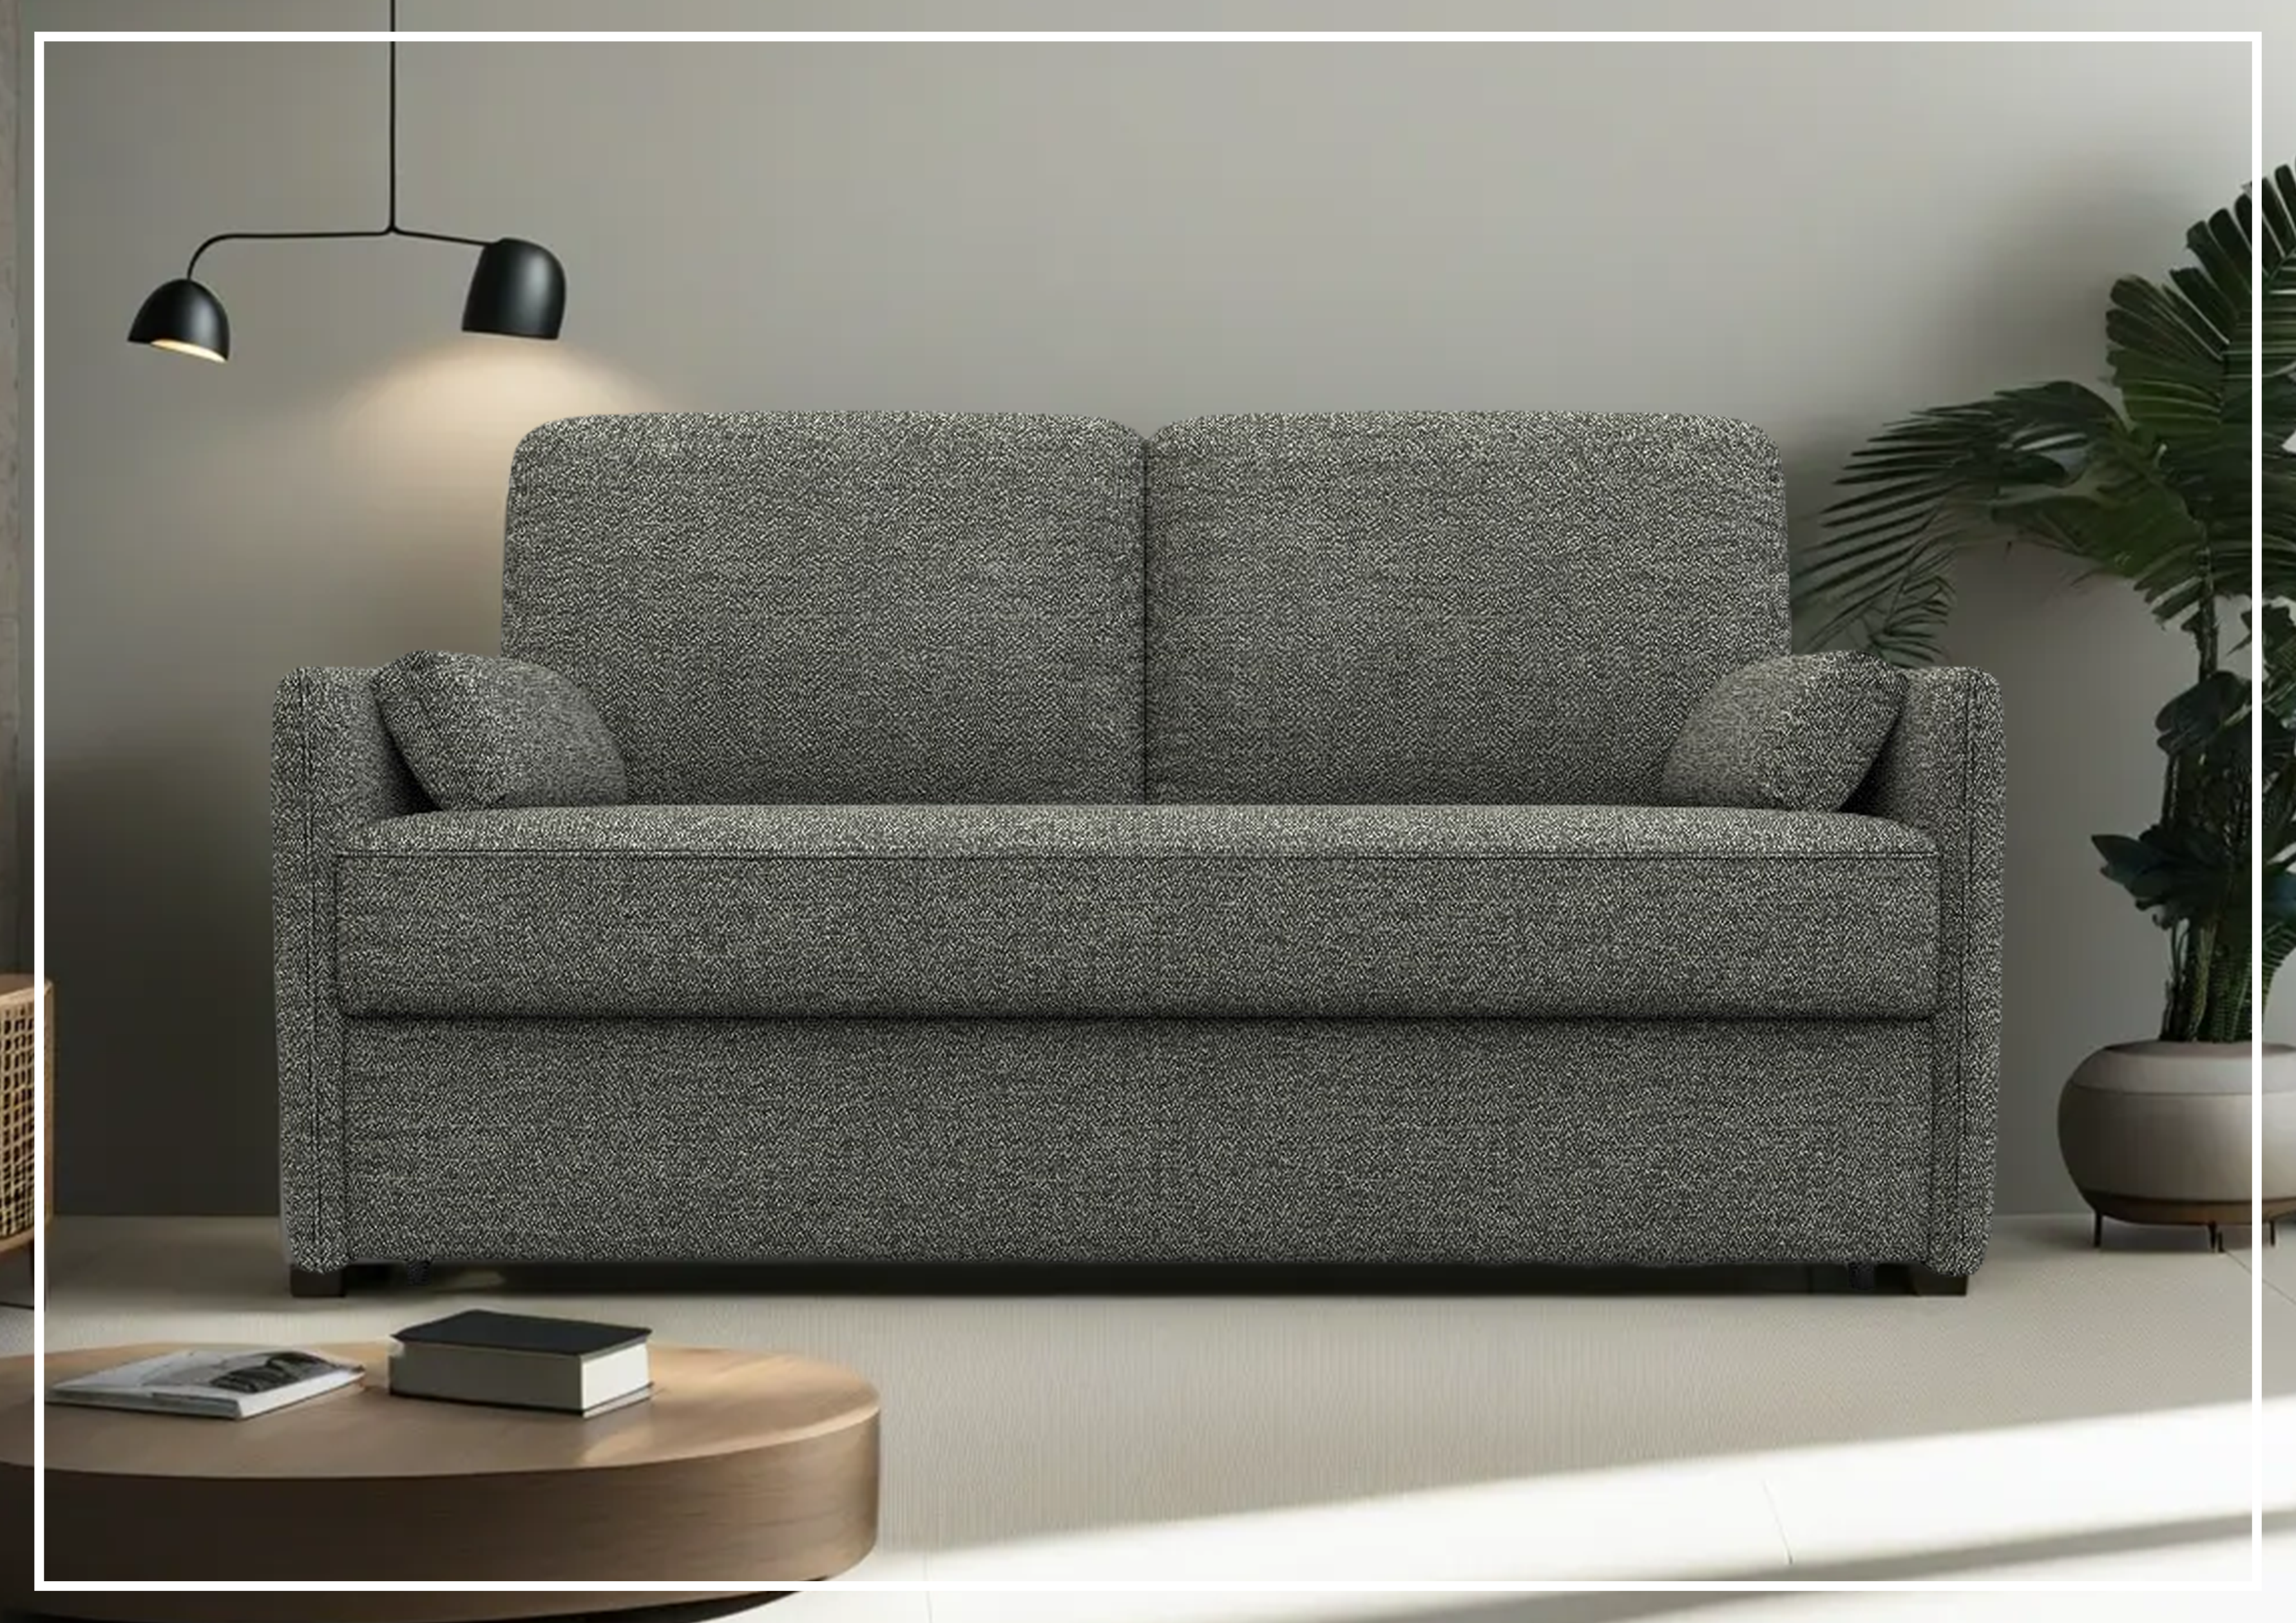 Sofa Grey 1 Memory Foam Modern Convertible Bed - furniture - by